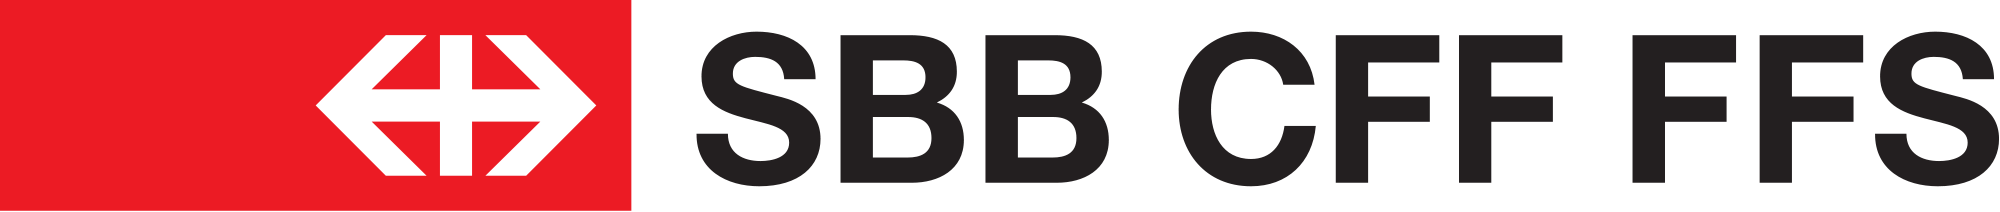 2000px-Sbb-logo.svg.png